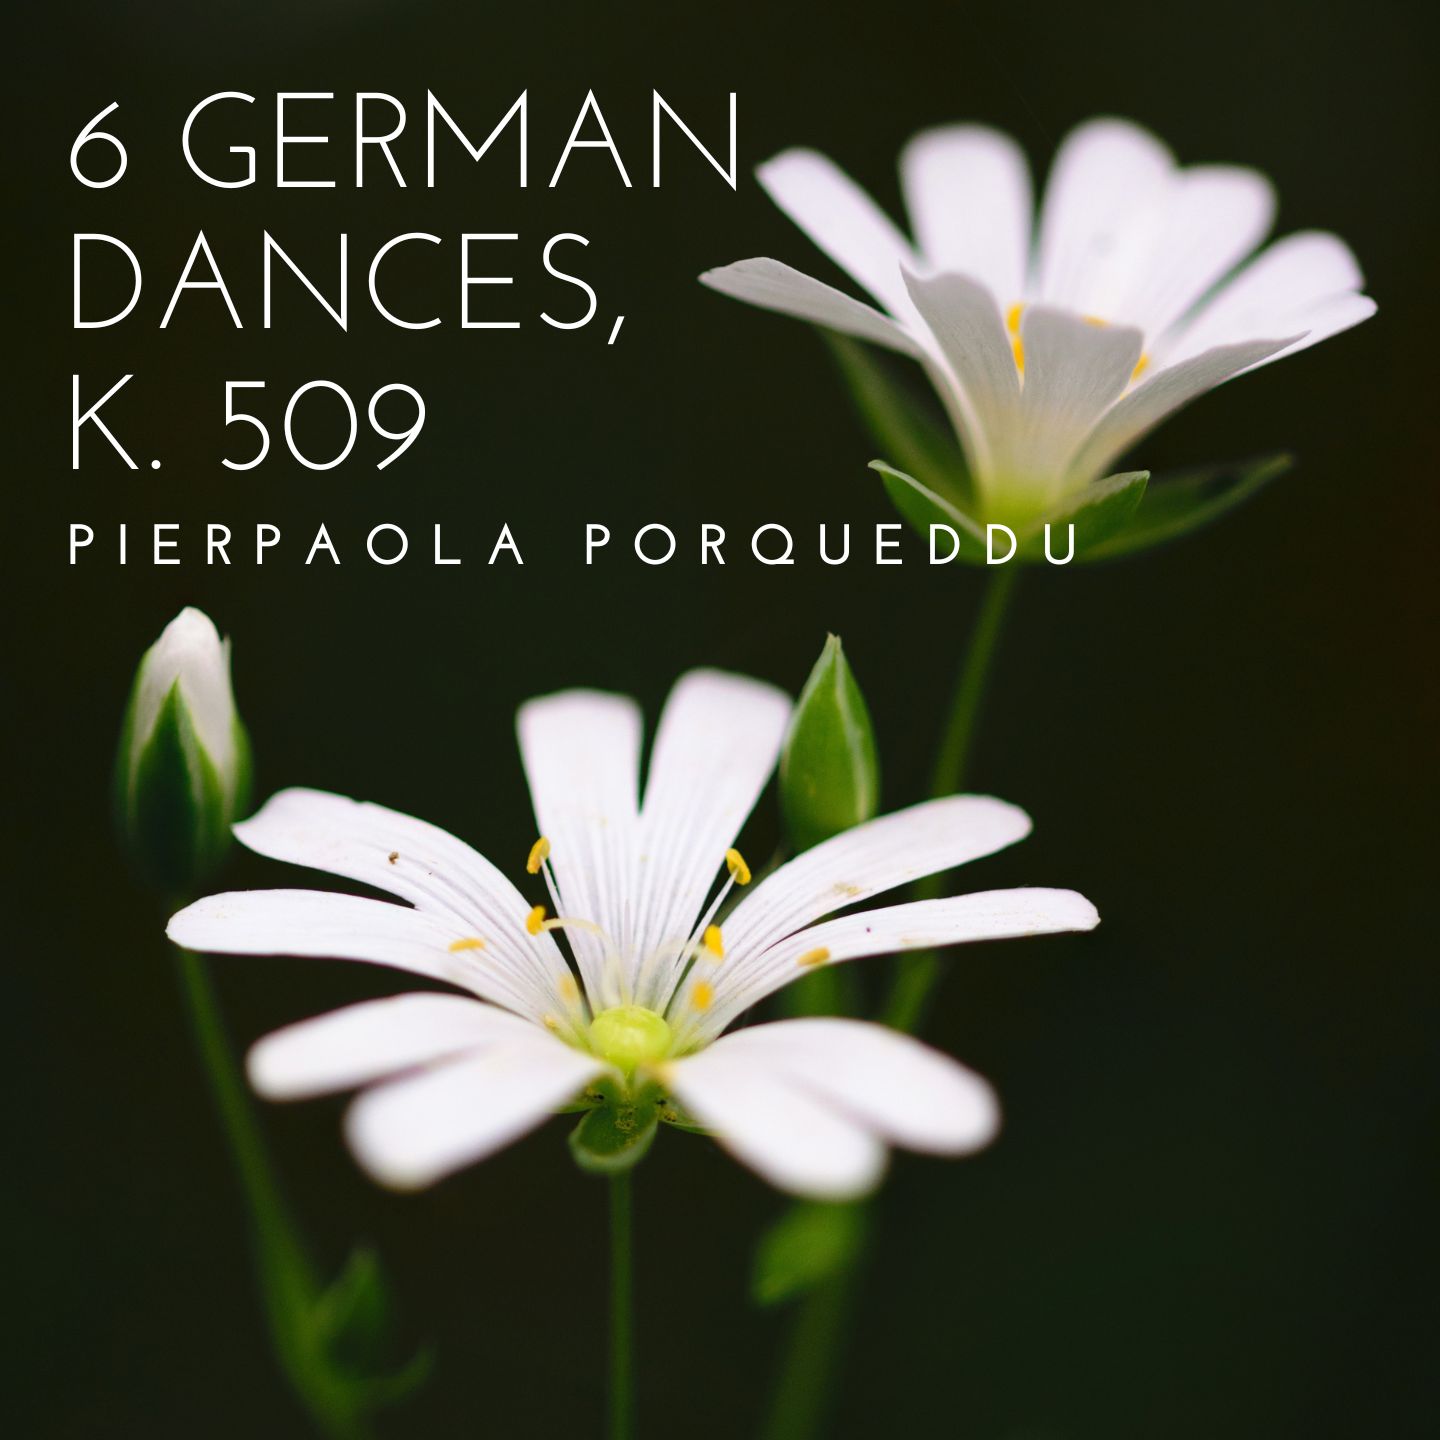 6 German Dances, K. 509